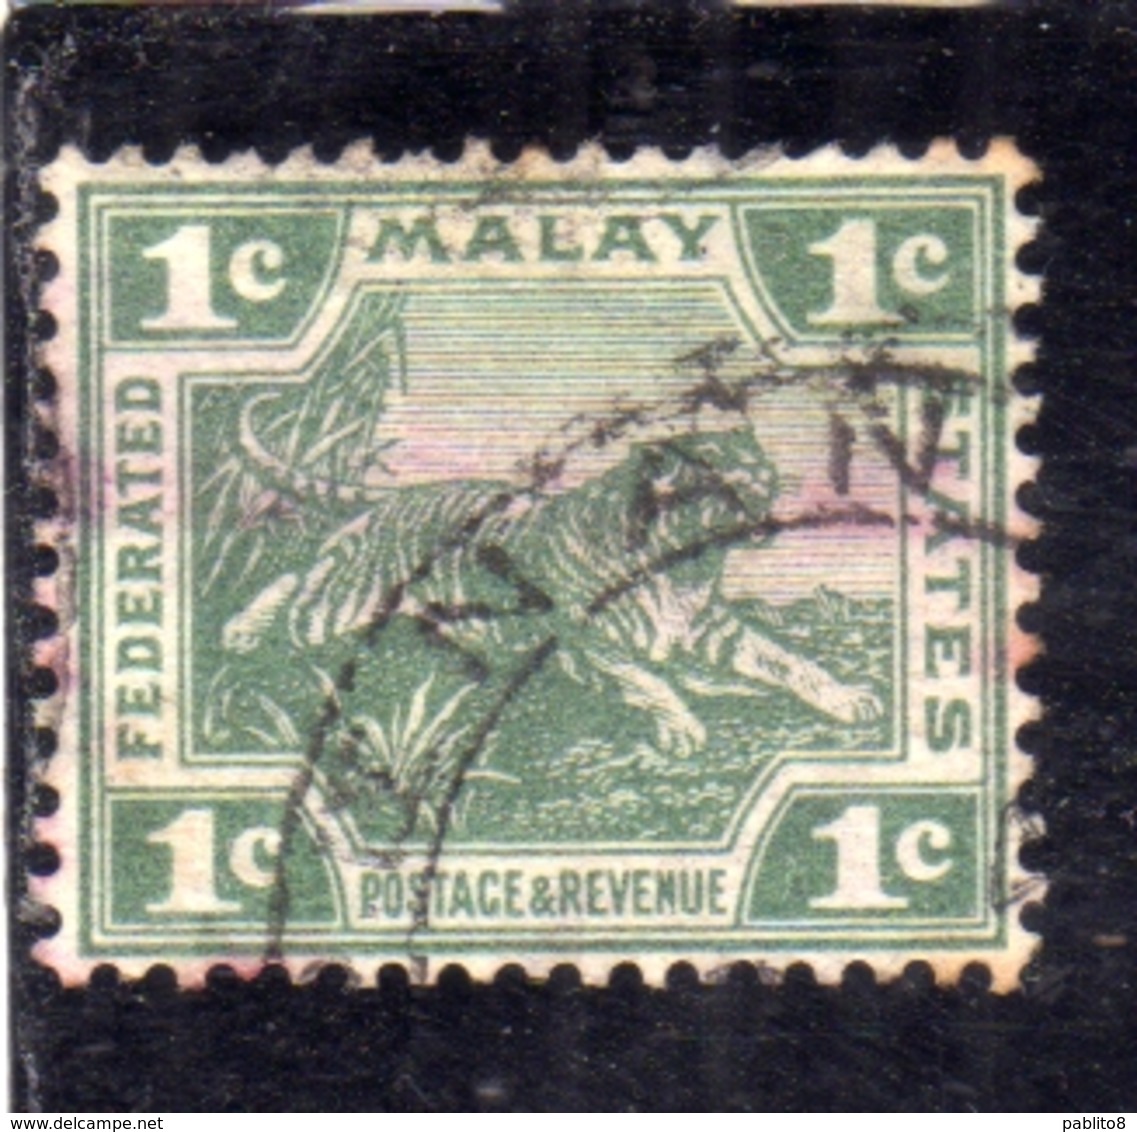 MALAY MALAYA MALAISIE MALESIA FEDERATED STATES 1906 1922 WILD FAUNA TIGER TIGRE CENT. 1c USATO USED OBLITERE' - Federation Of Malaya